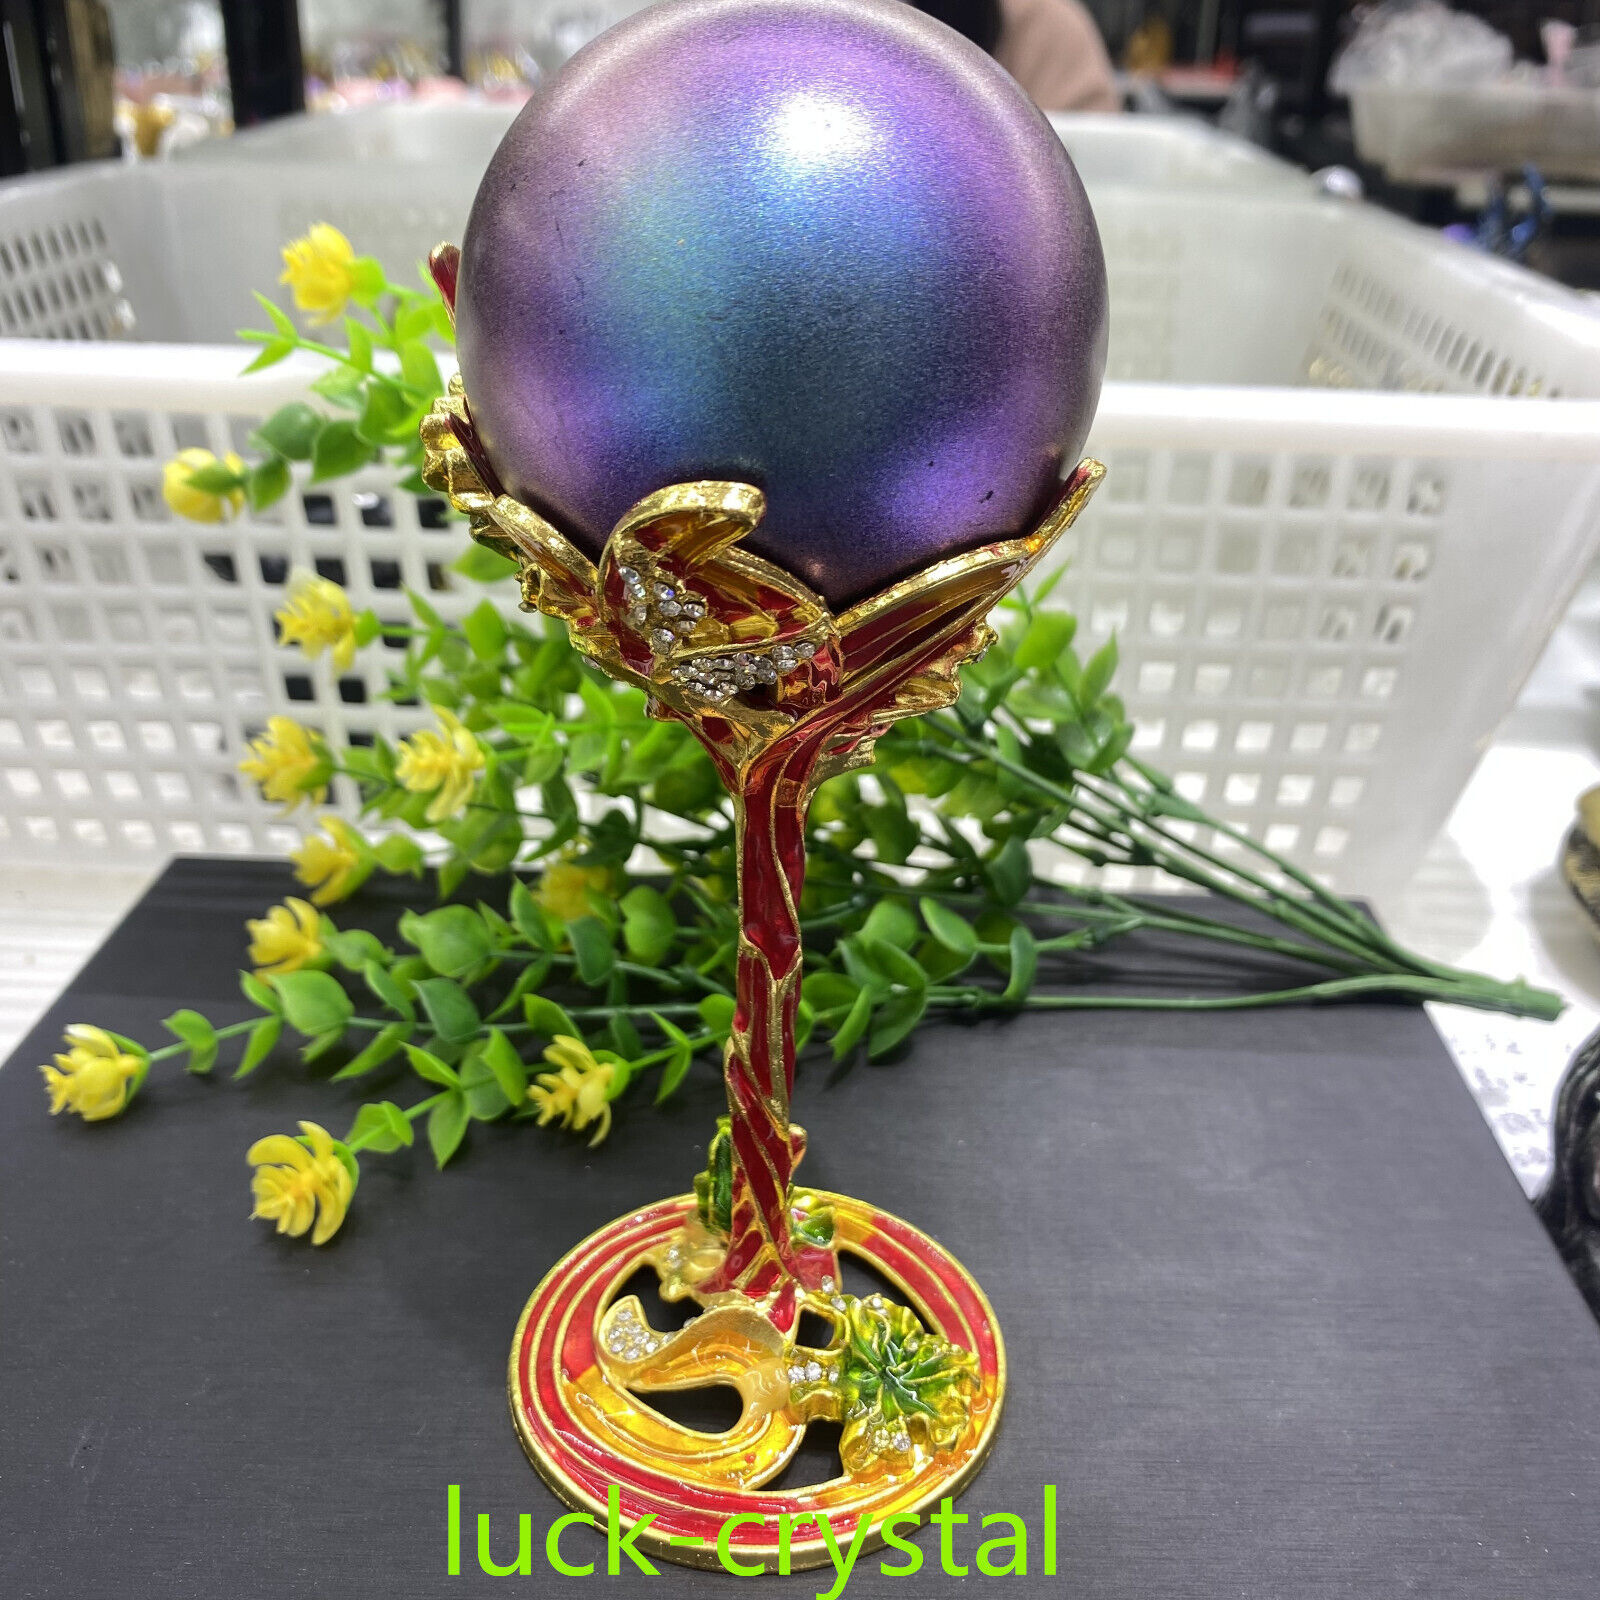 140g Sphere Holder Stand Base Nataral Crystal Ball Reiki Healing Gift ,1pc,fs25